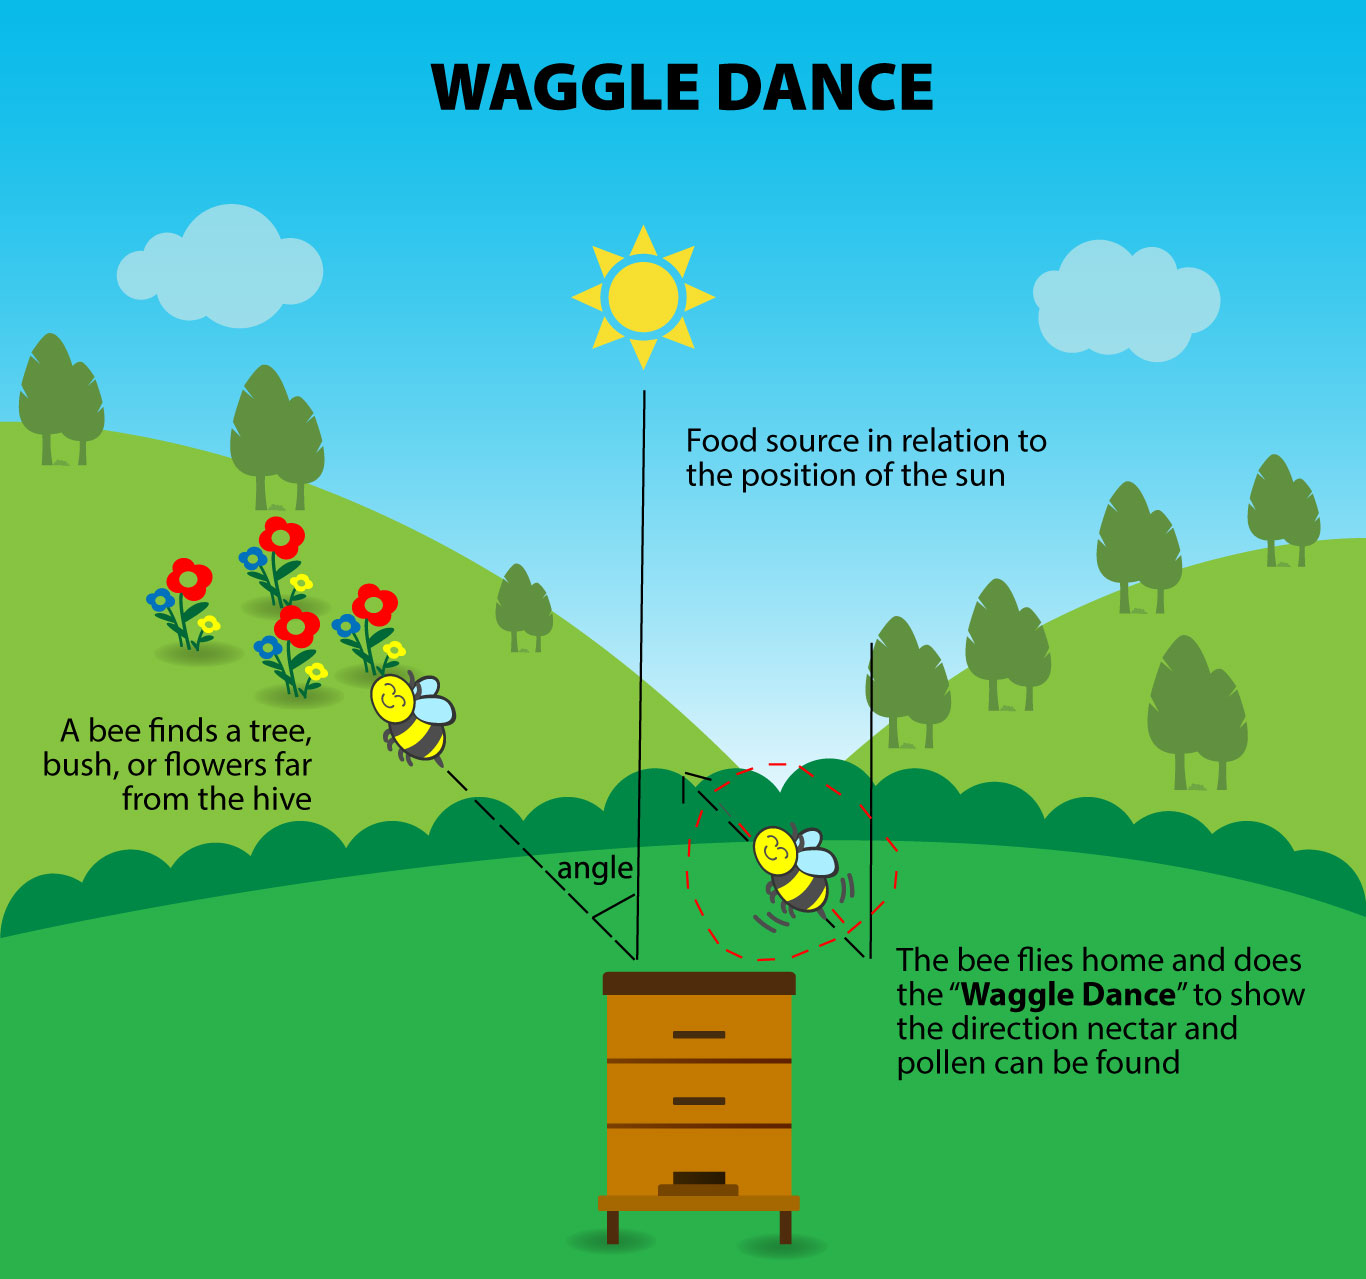 Waggle Dance image